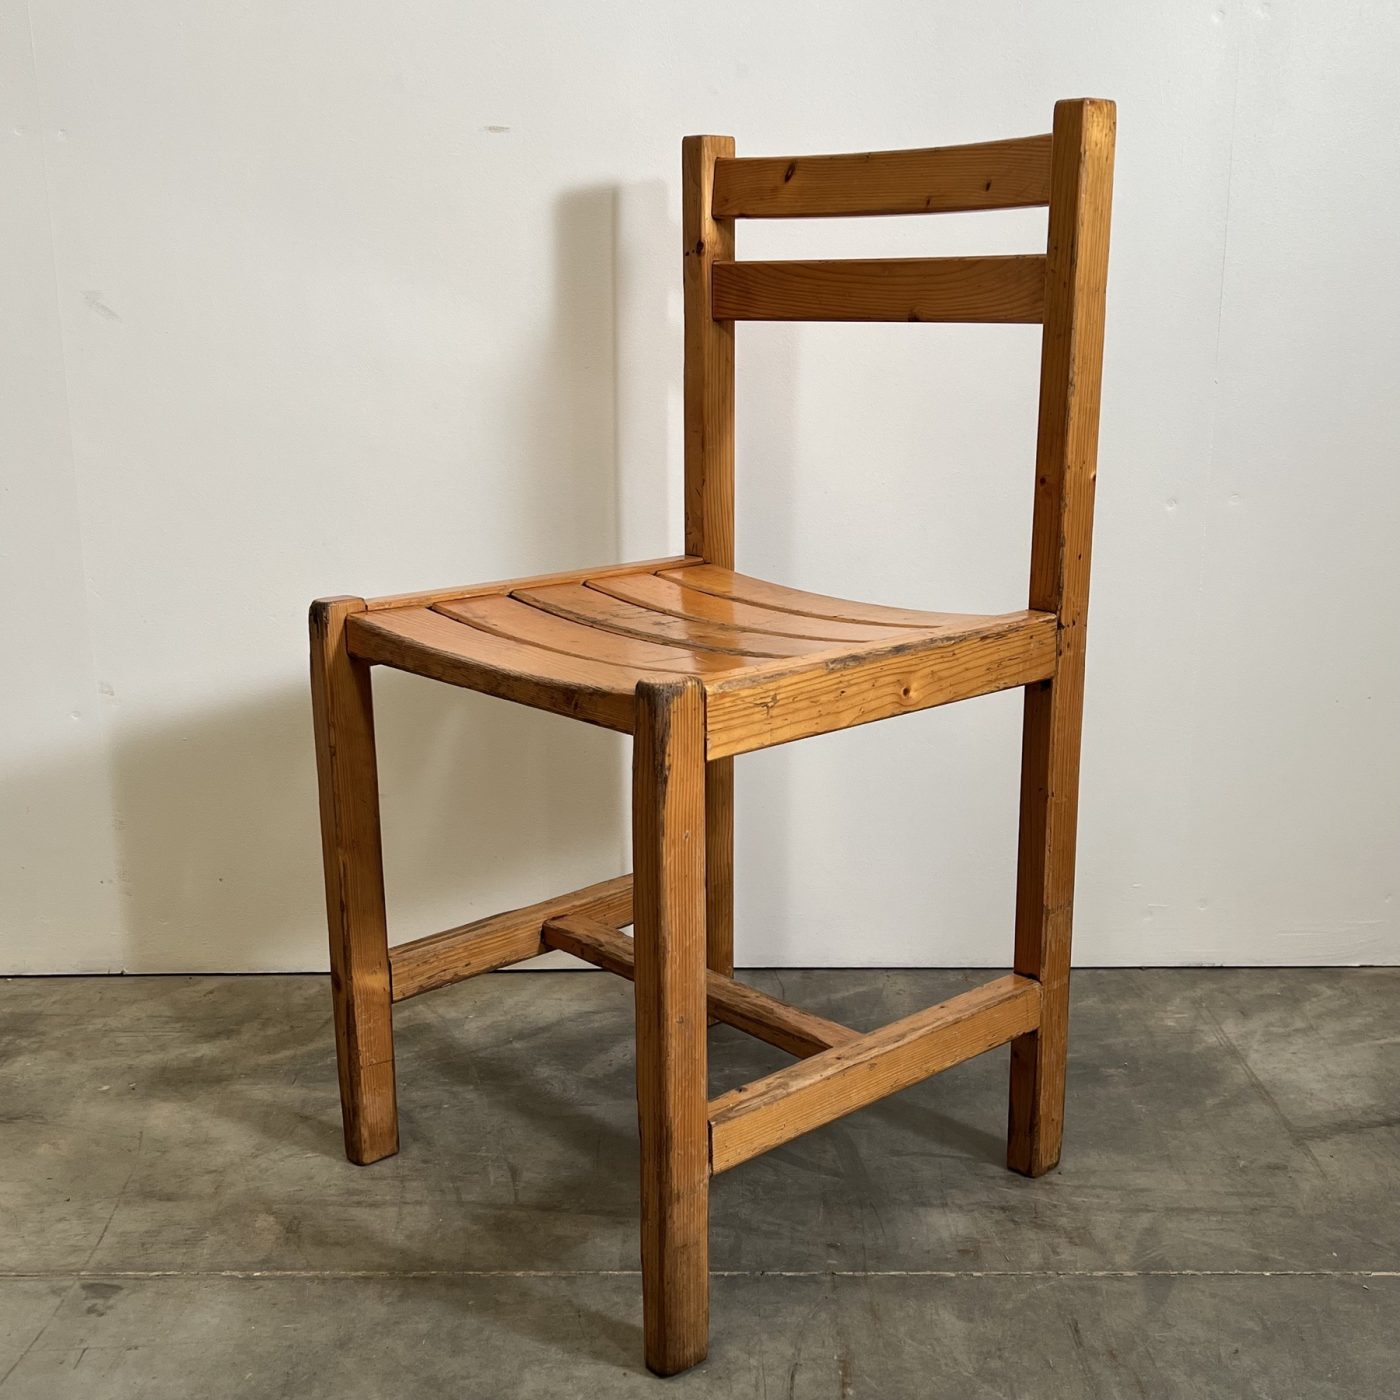 objet-vagabond-chairs0006